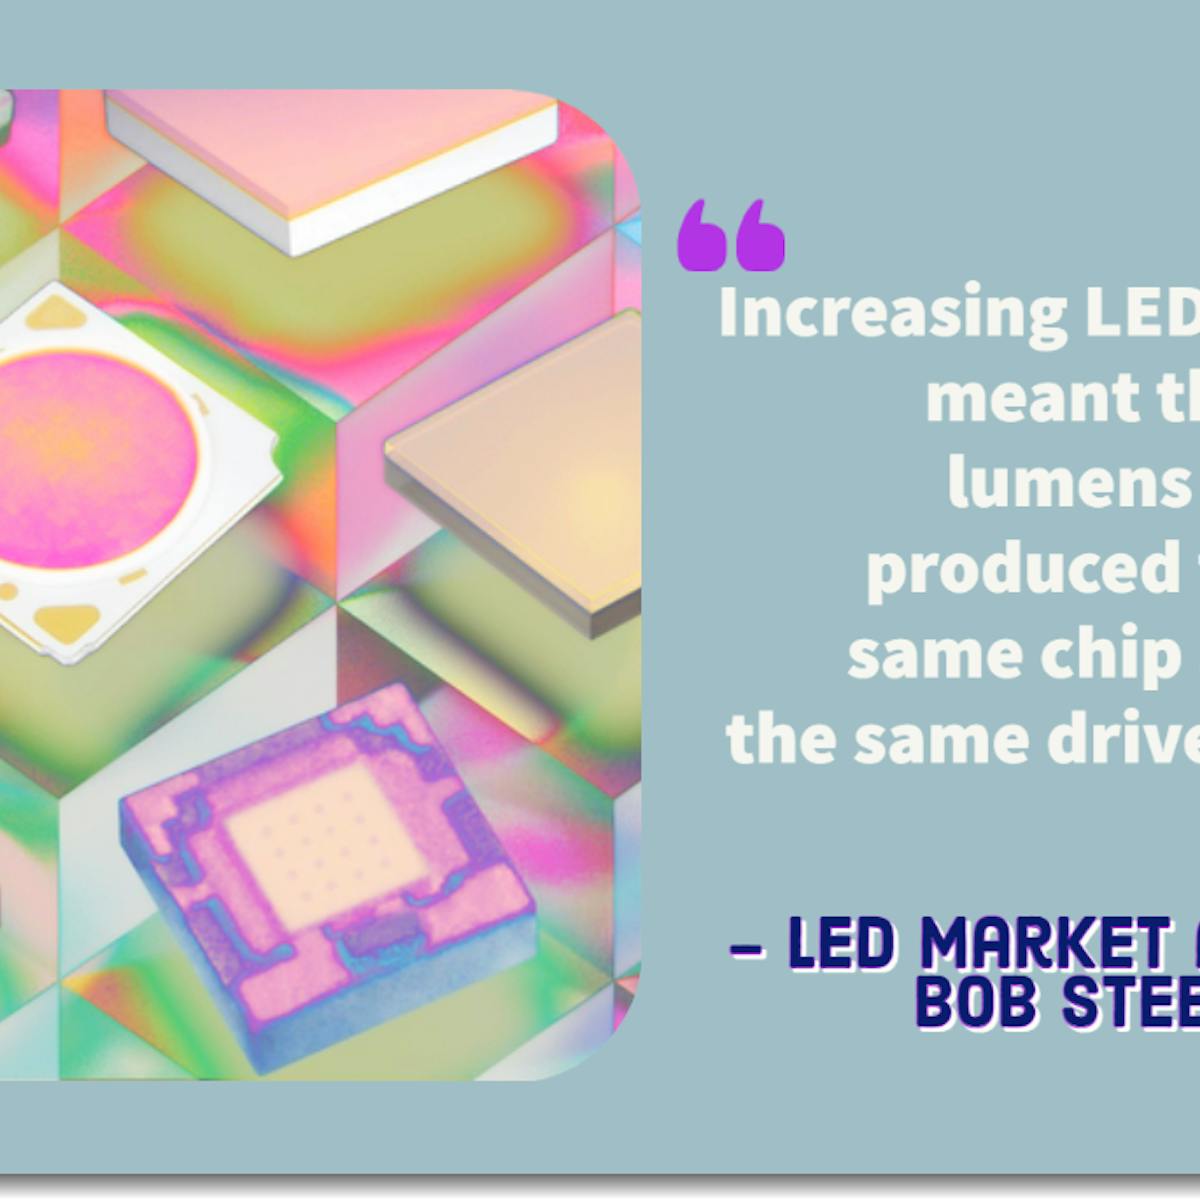 Image credit: LEDs stock image developed by Chris Hipp for Endeavor Business Media.